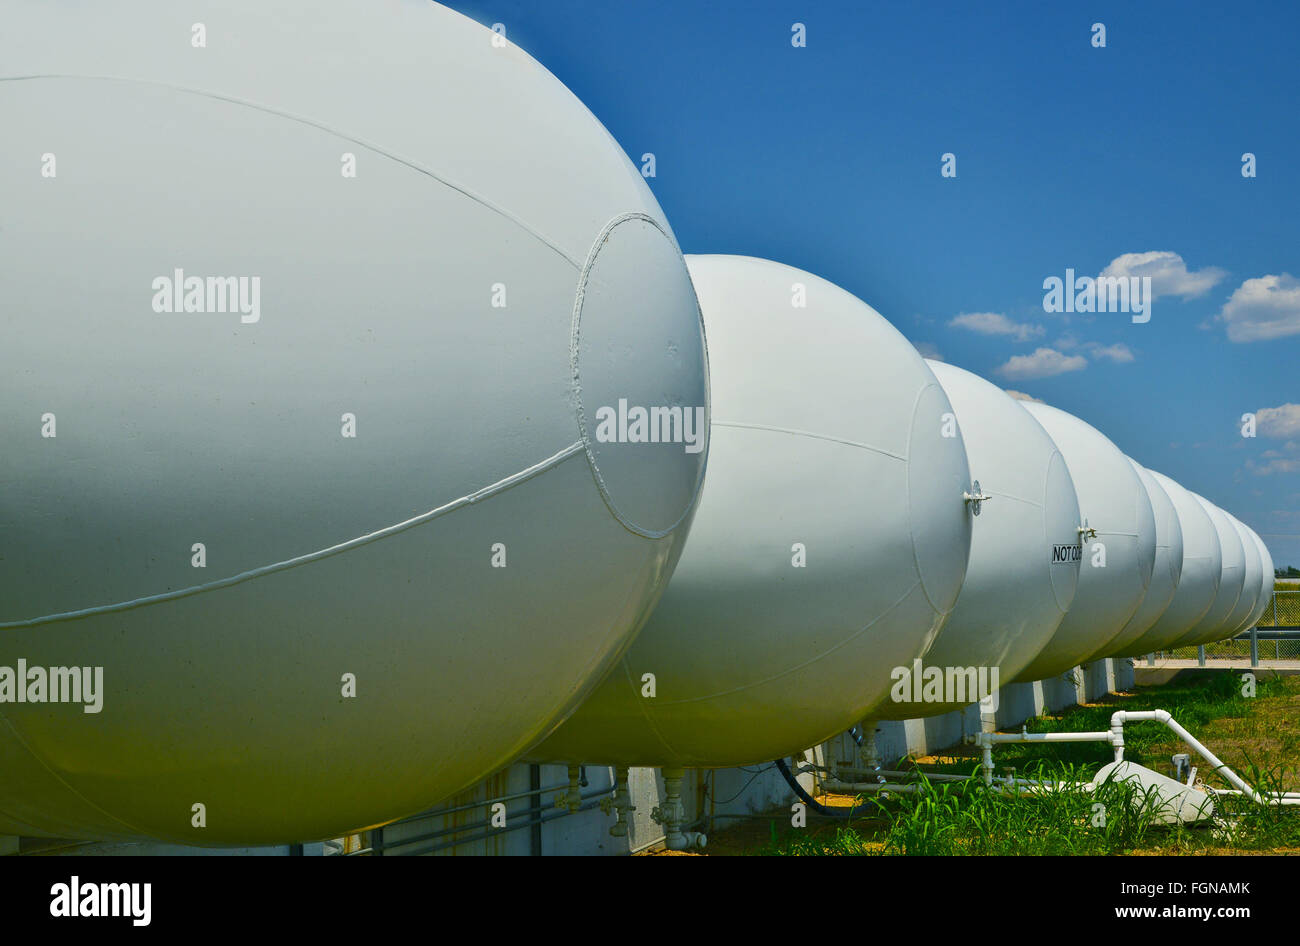 High Pressure Propane storage tanks Stock Photo